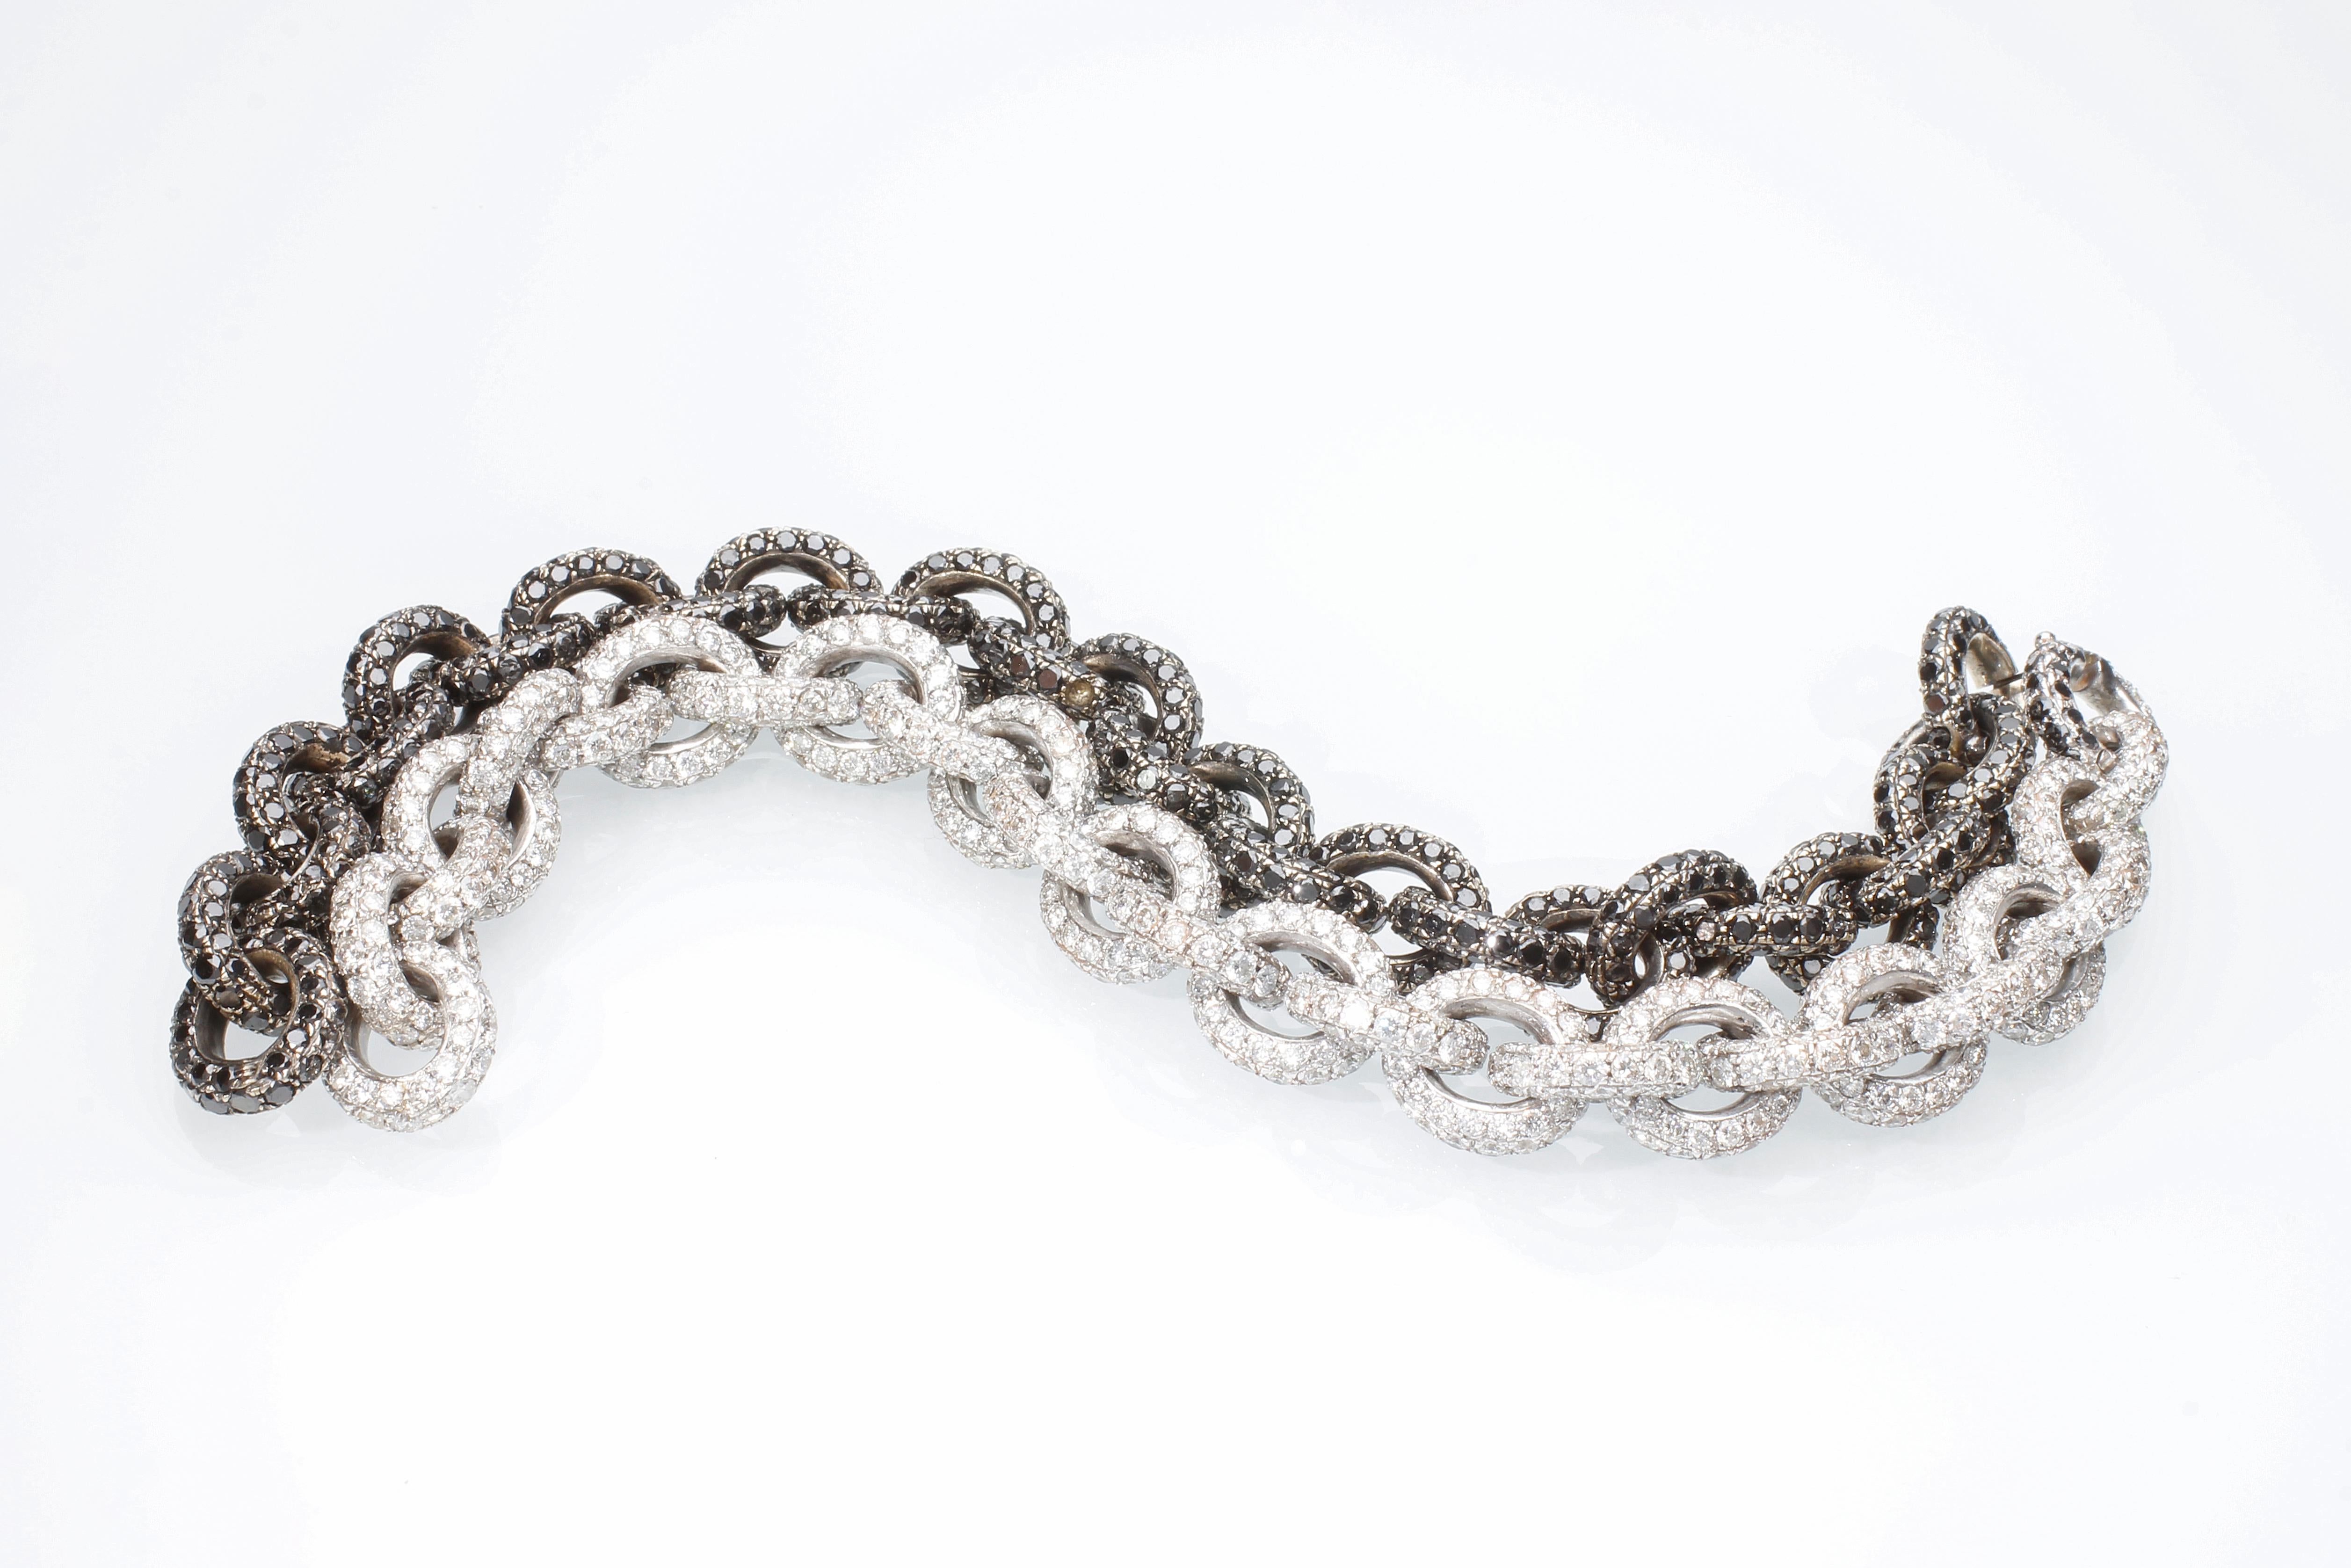 Brilliant Cut Chain Bracelet with 33.50 Ct of Black Diamonds. Single Piece. Handmade For Sale